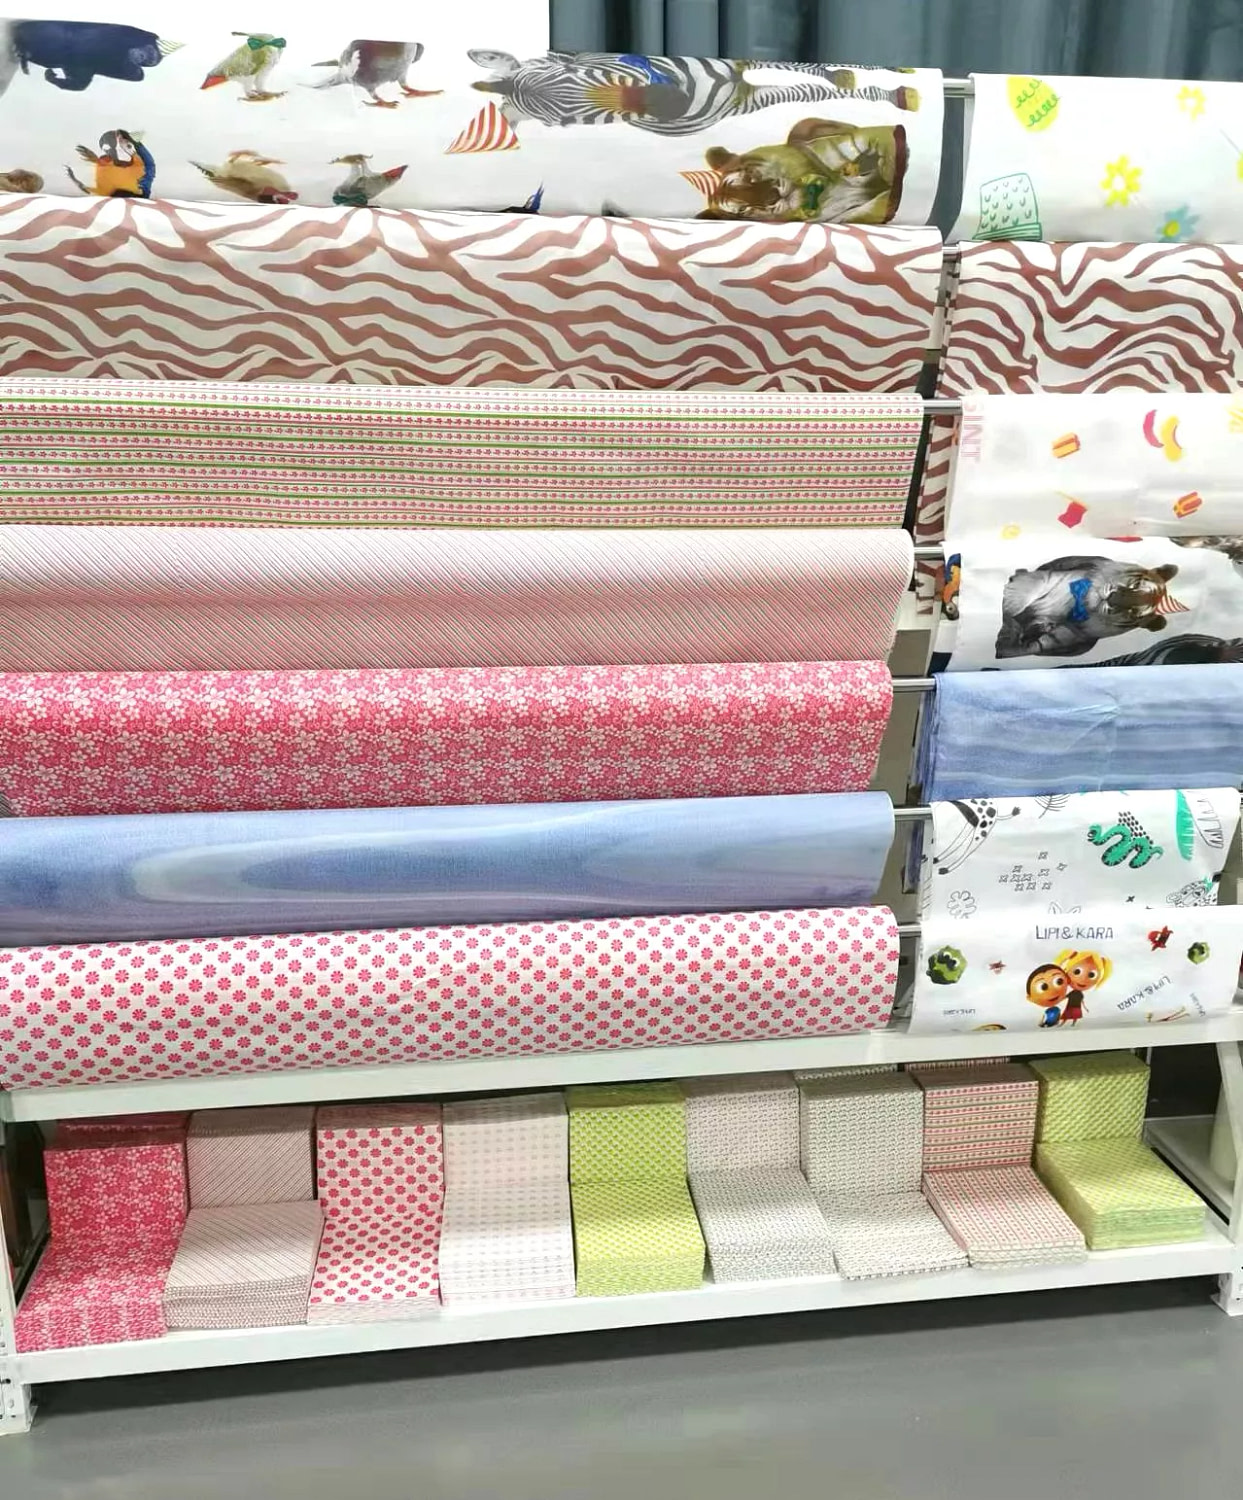 display of patterned linen-like napkin in bulk